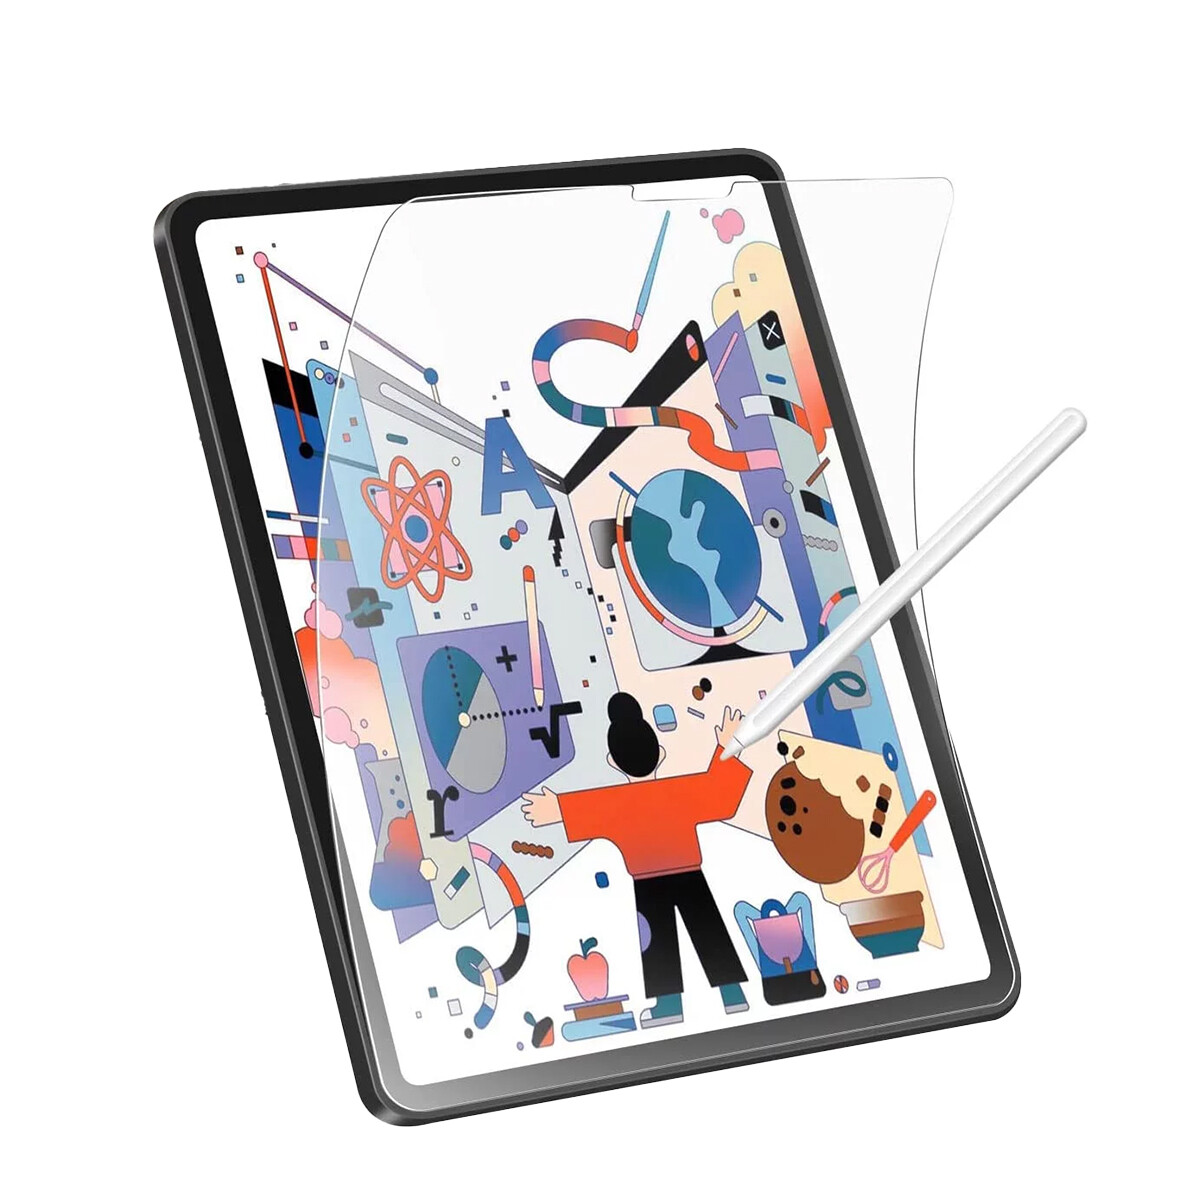 Protector de Pantalla Mate Textura Papel PaperFeel 11" para iPad Pro 1st Generation - Transparente 